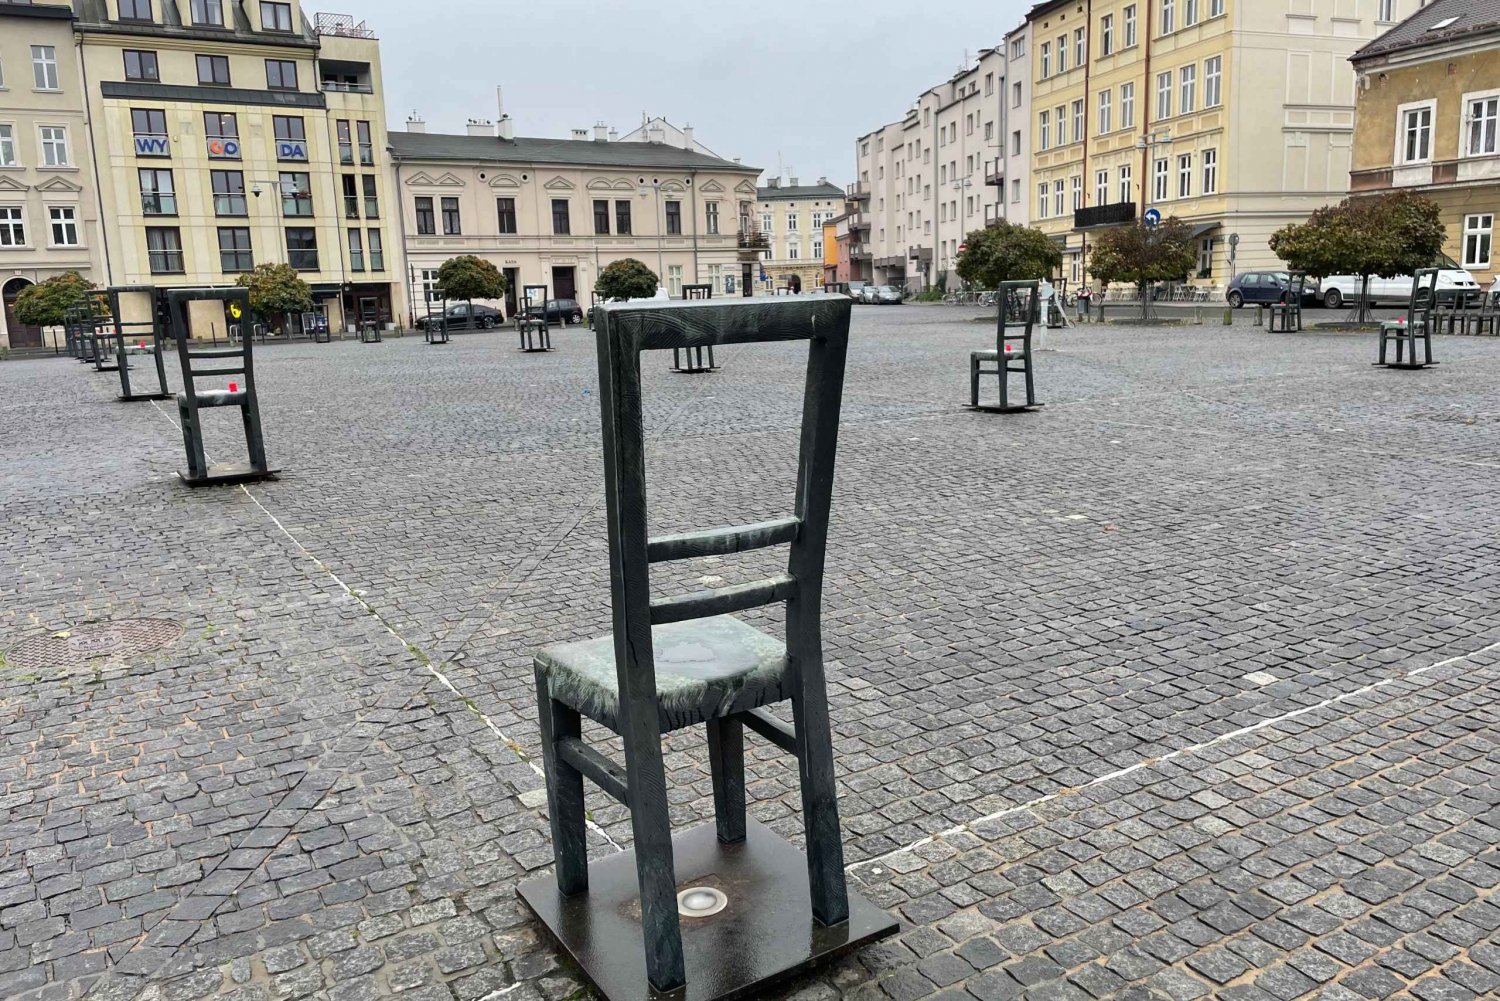 Kraków: Jewish Quarter and Ghetto Self-Guided Walking Tour